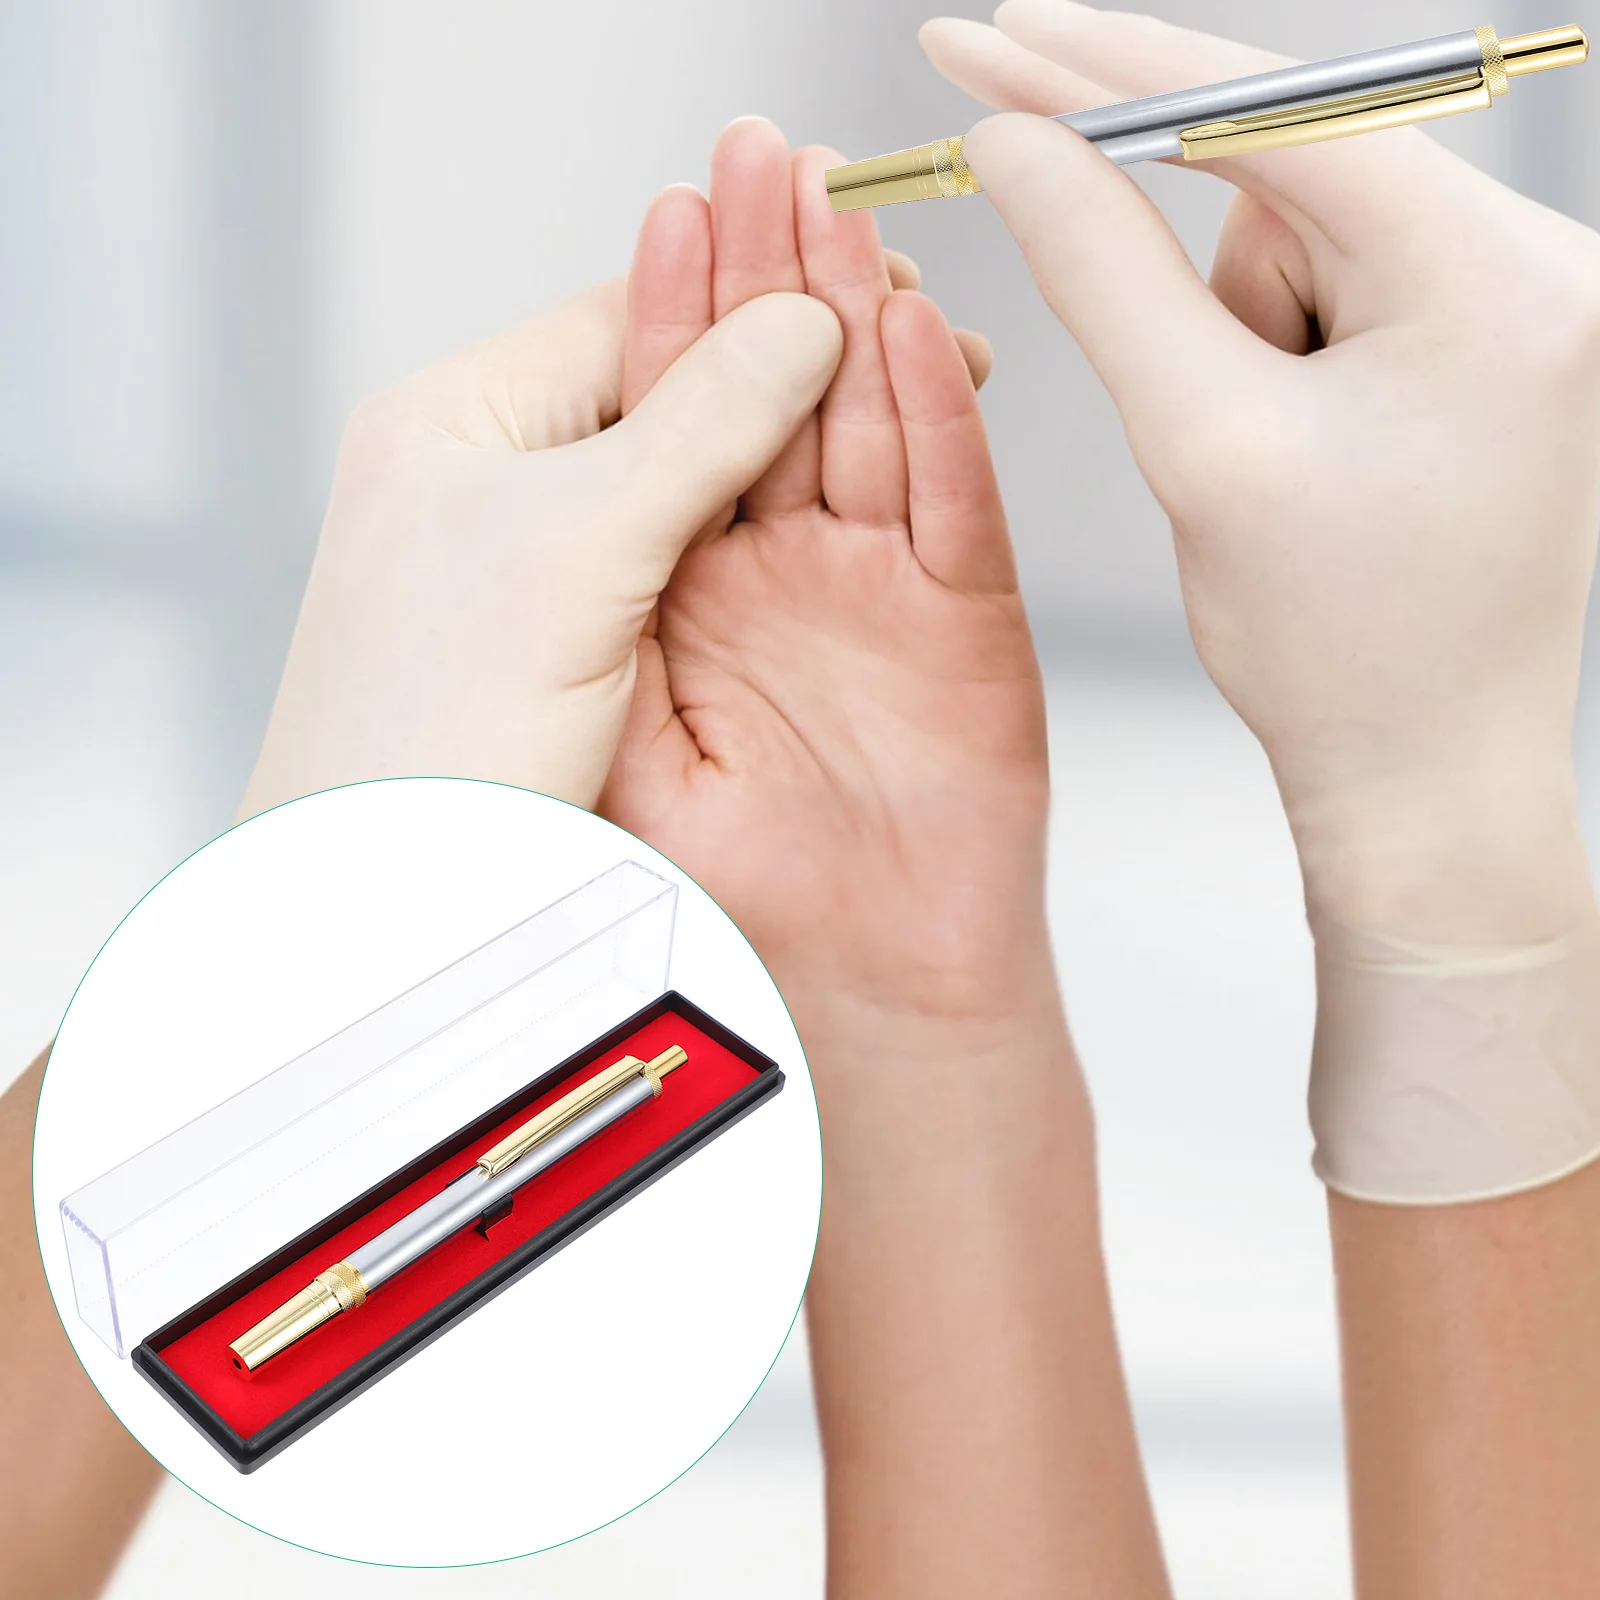 

Lancet Metal Point Pen Acupuncture Massage Needle Holder Blood Safe Bloodletting Painless Lancing